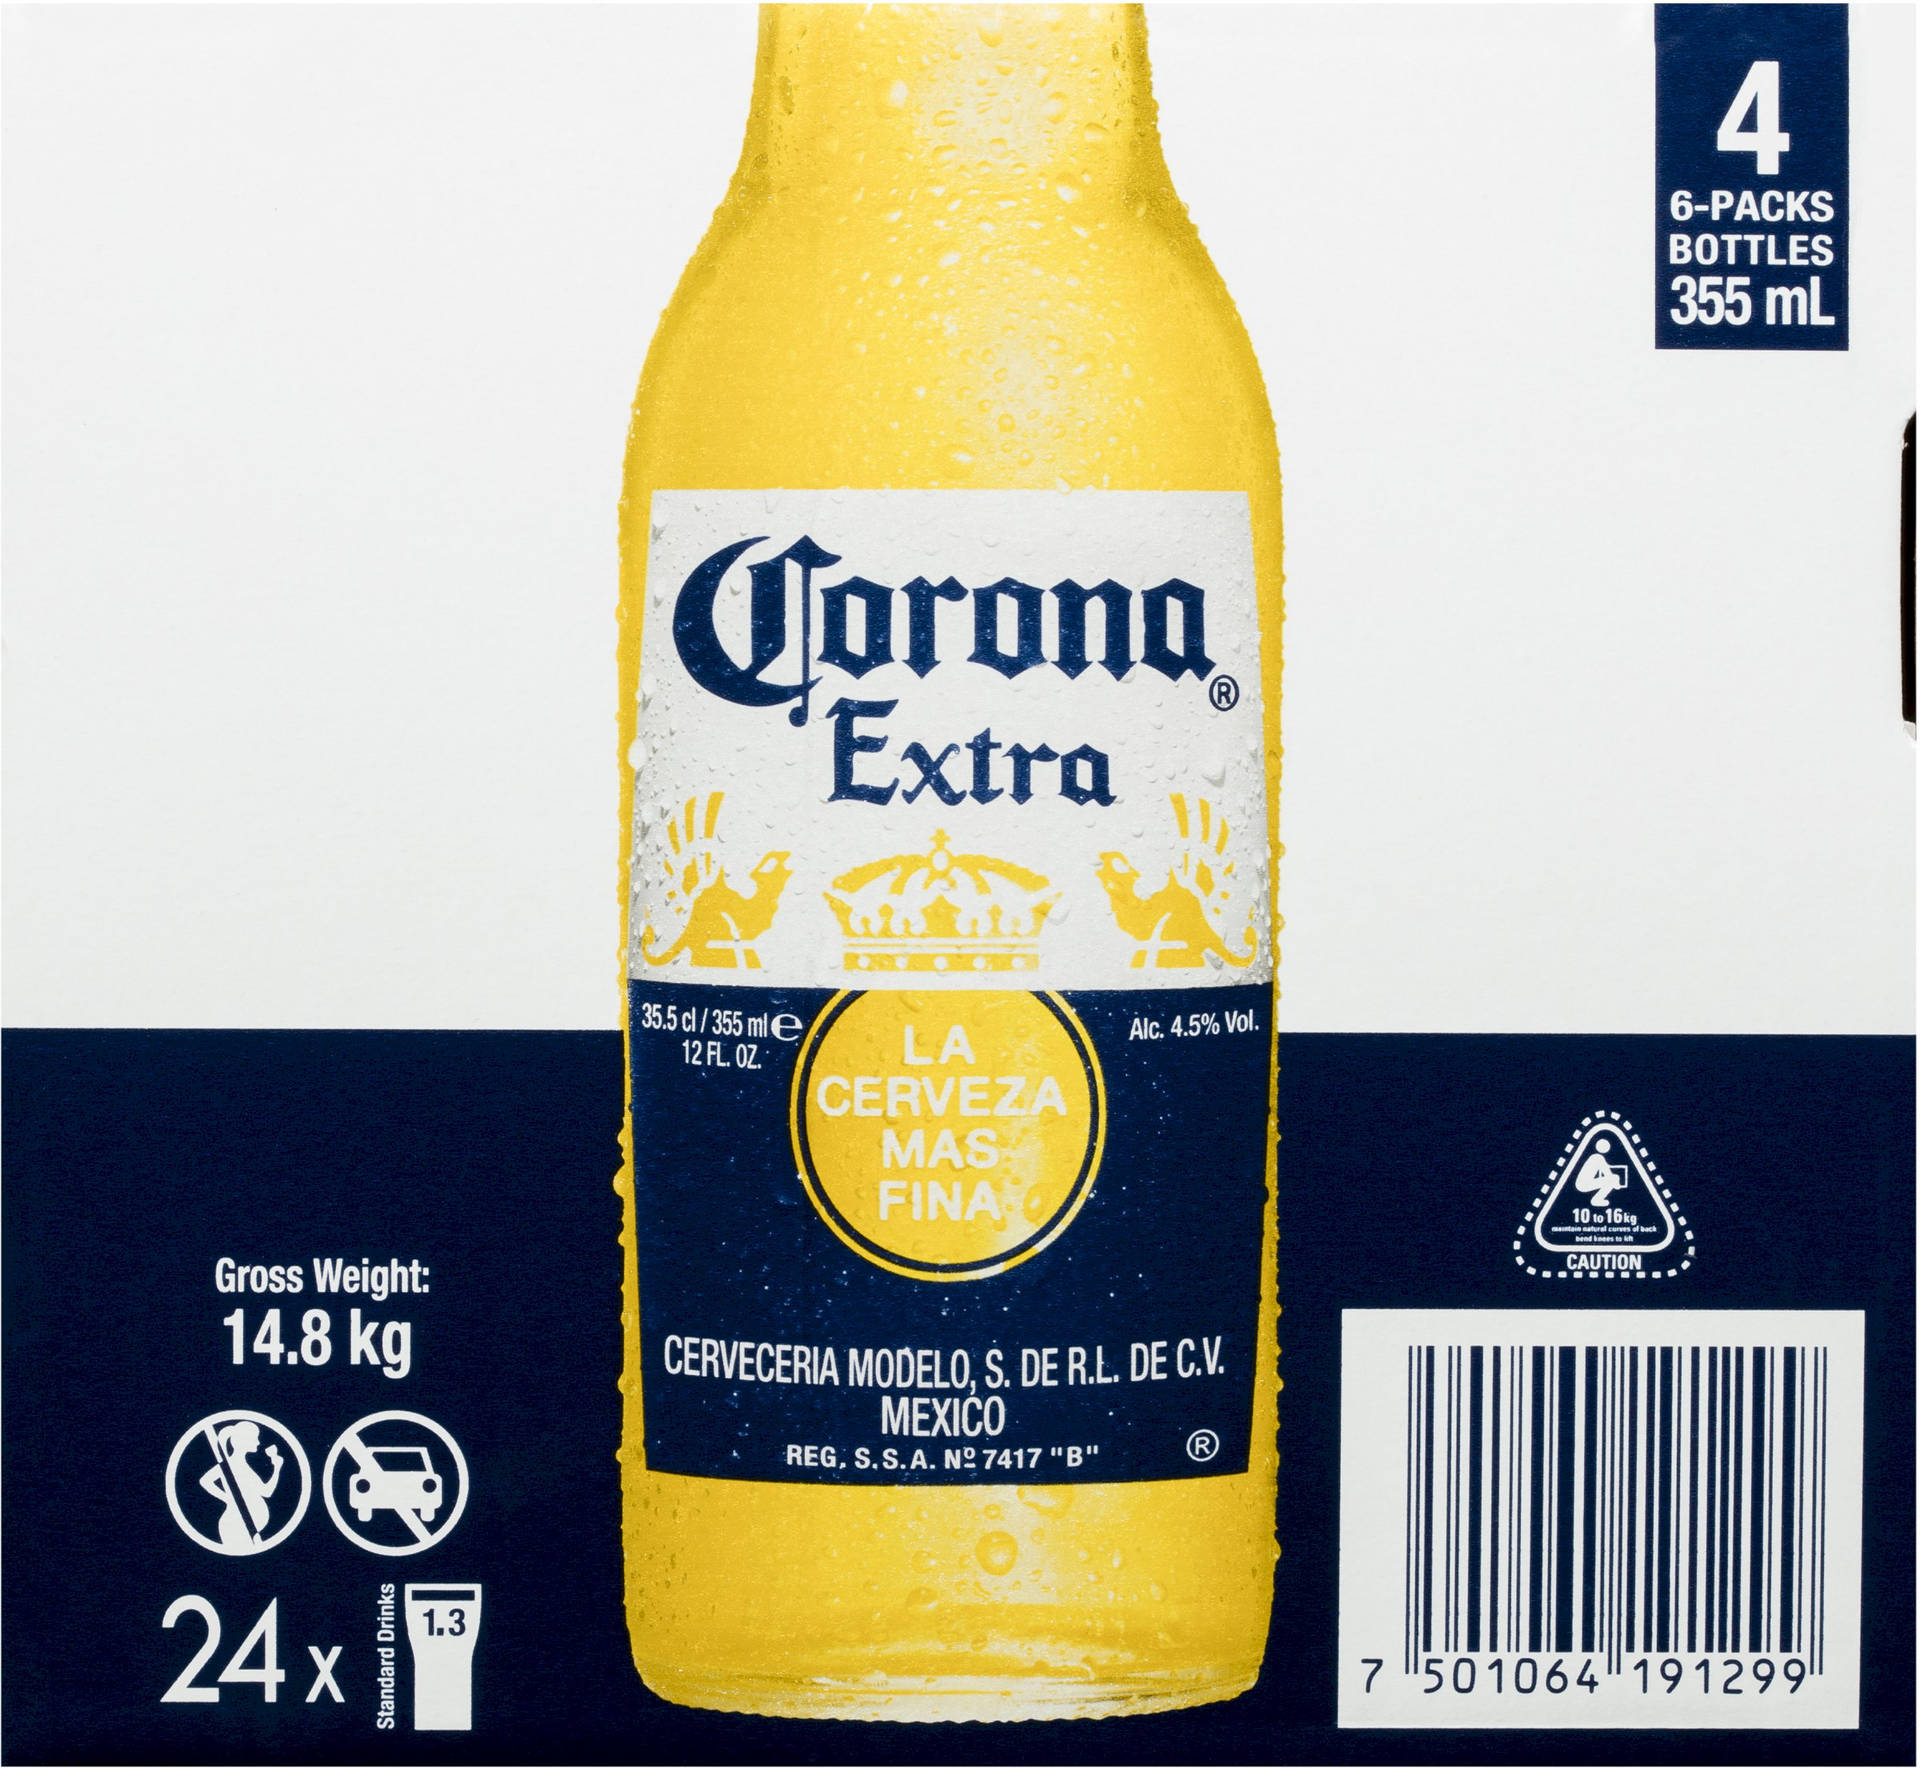 Corona Extra Beer Box Layout Wallpaper